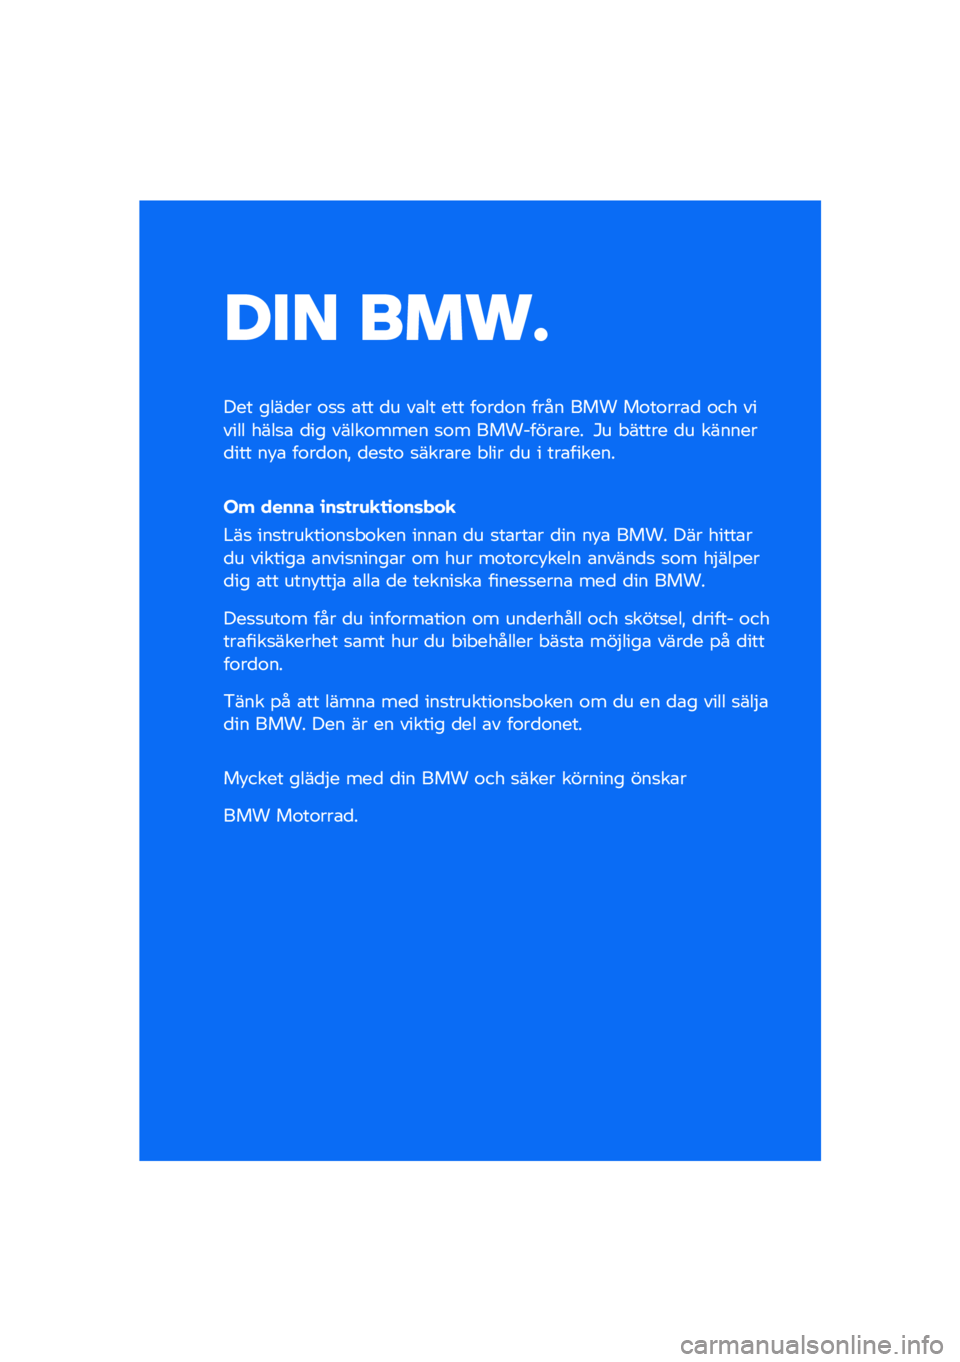 BMW MOTORRAD CE 04 2021  Instruktionsbok (in Swedish) ��� ����\b
��� ����
�� �\f�
�
 �\b�� �
� ��\b�� ��� ��\f��
�\f� ���� ��� ��\f��\f���\b�
 �\f�� ������ ����
�\b �
�� �����\f���� �
�\f� ���